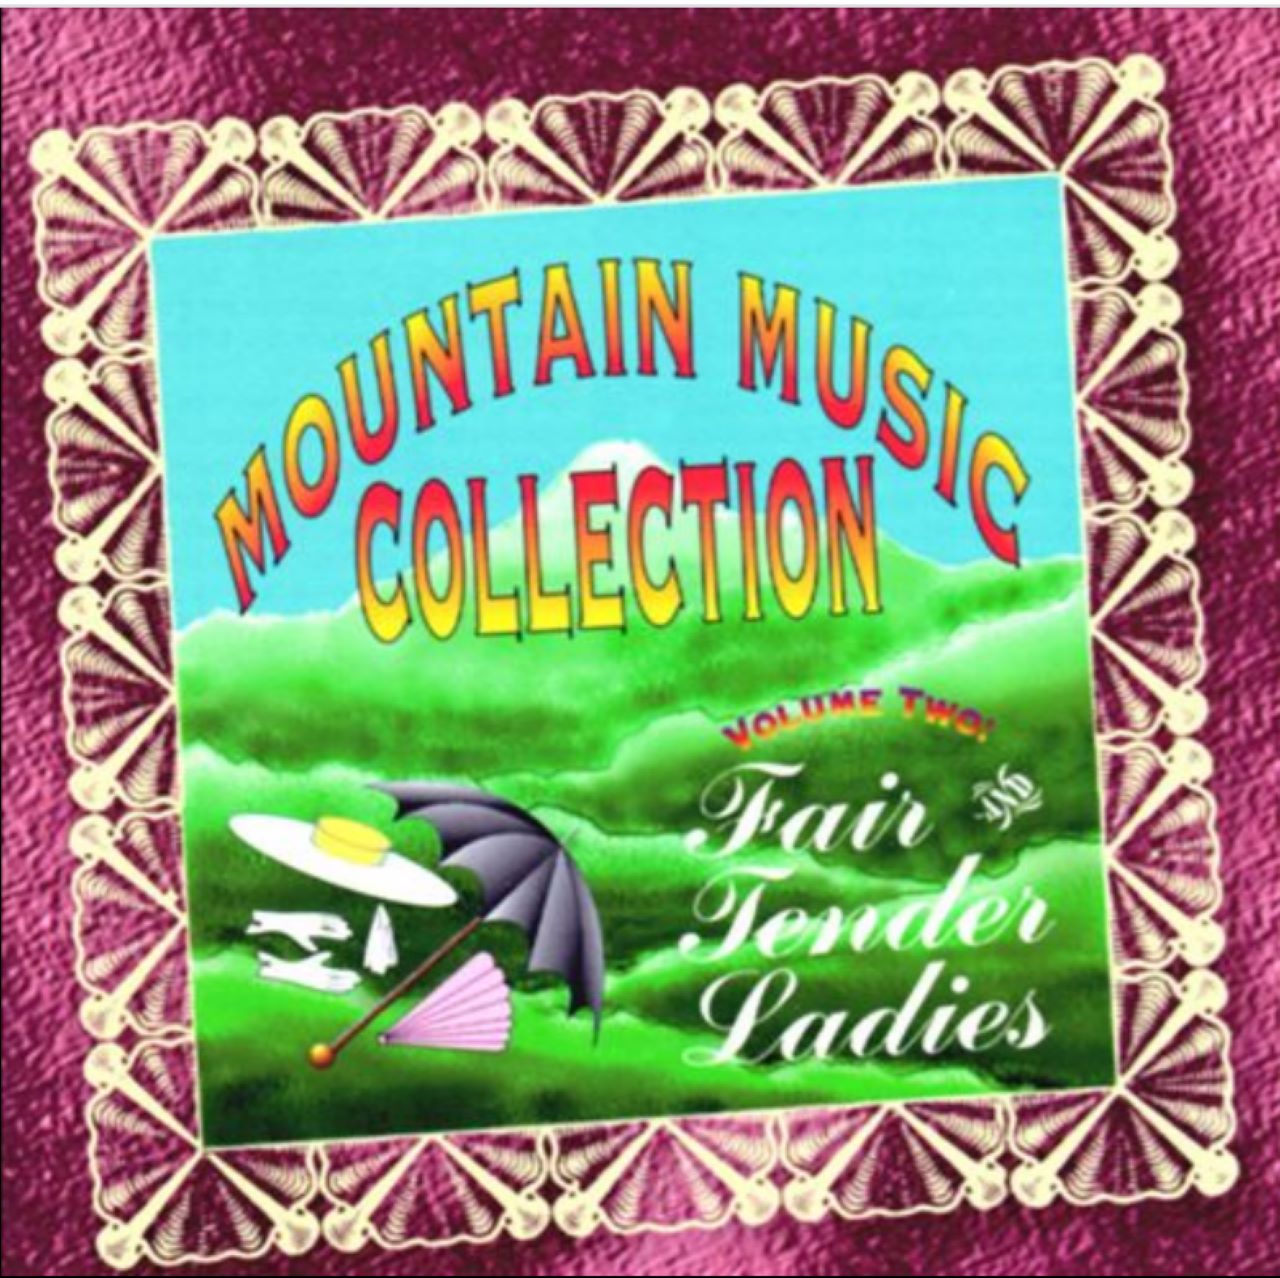 A.A.V.V. – Mountain Music Collection, Vol. 2, Fair & Tender Ladies cover album